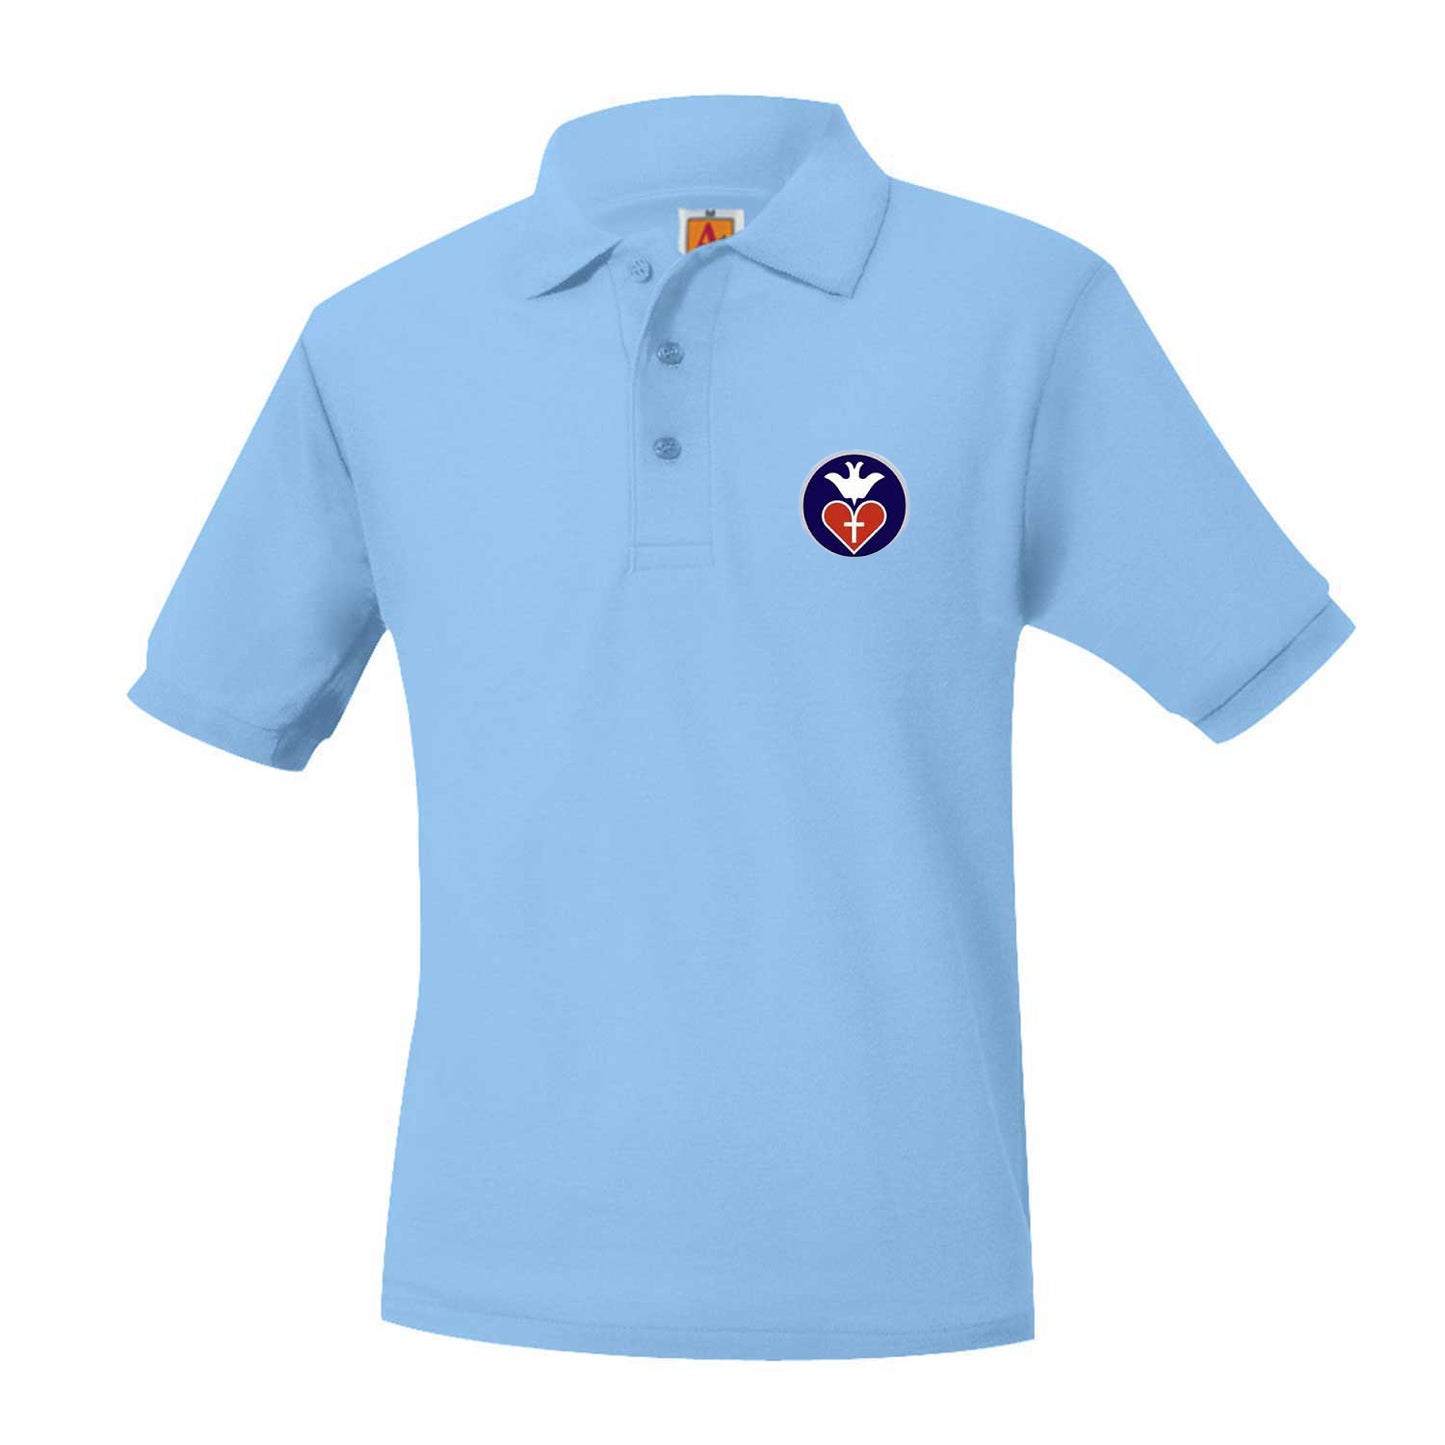 Youth Short Sleeve Pique Polo With St. Vincent De Paul Logo